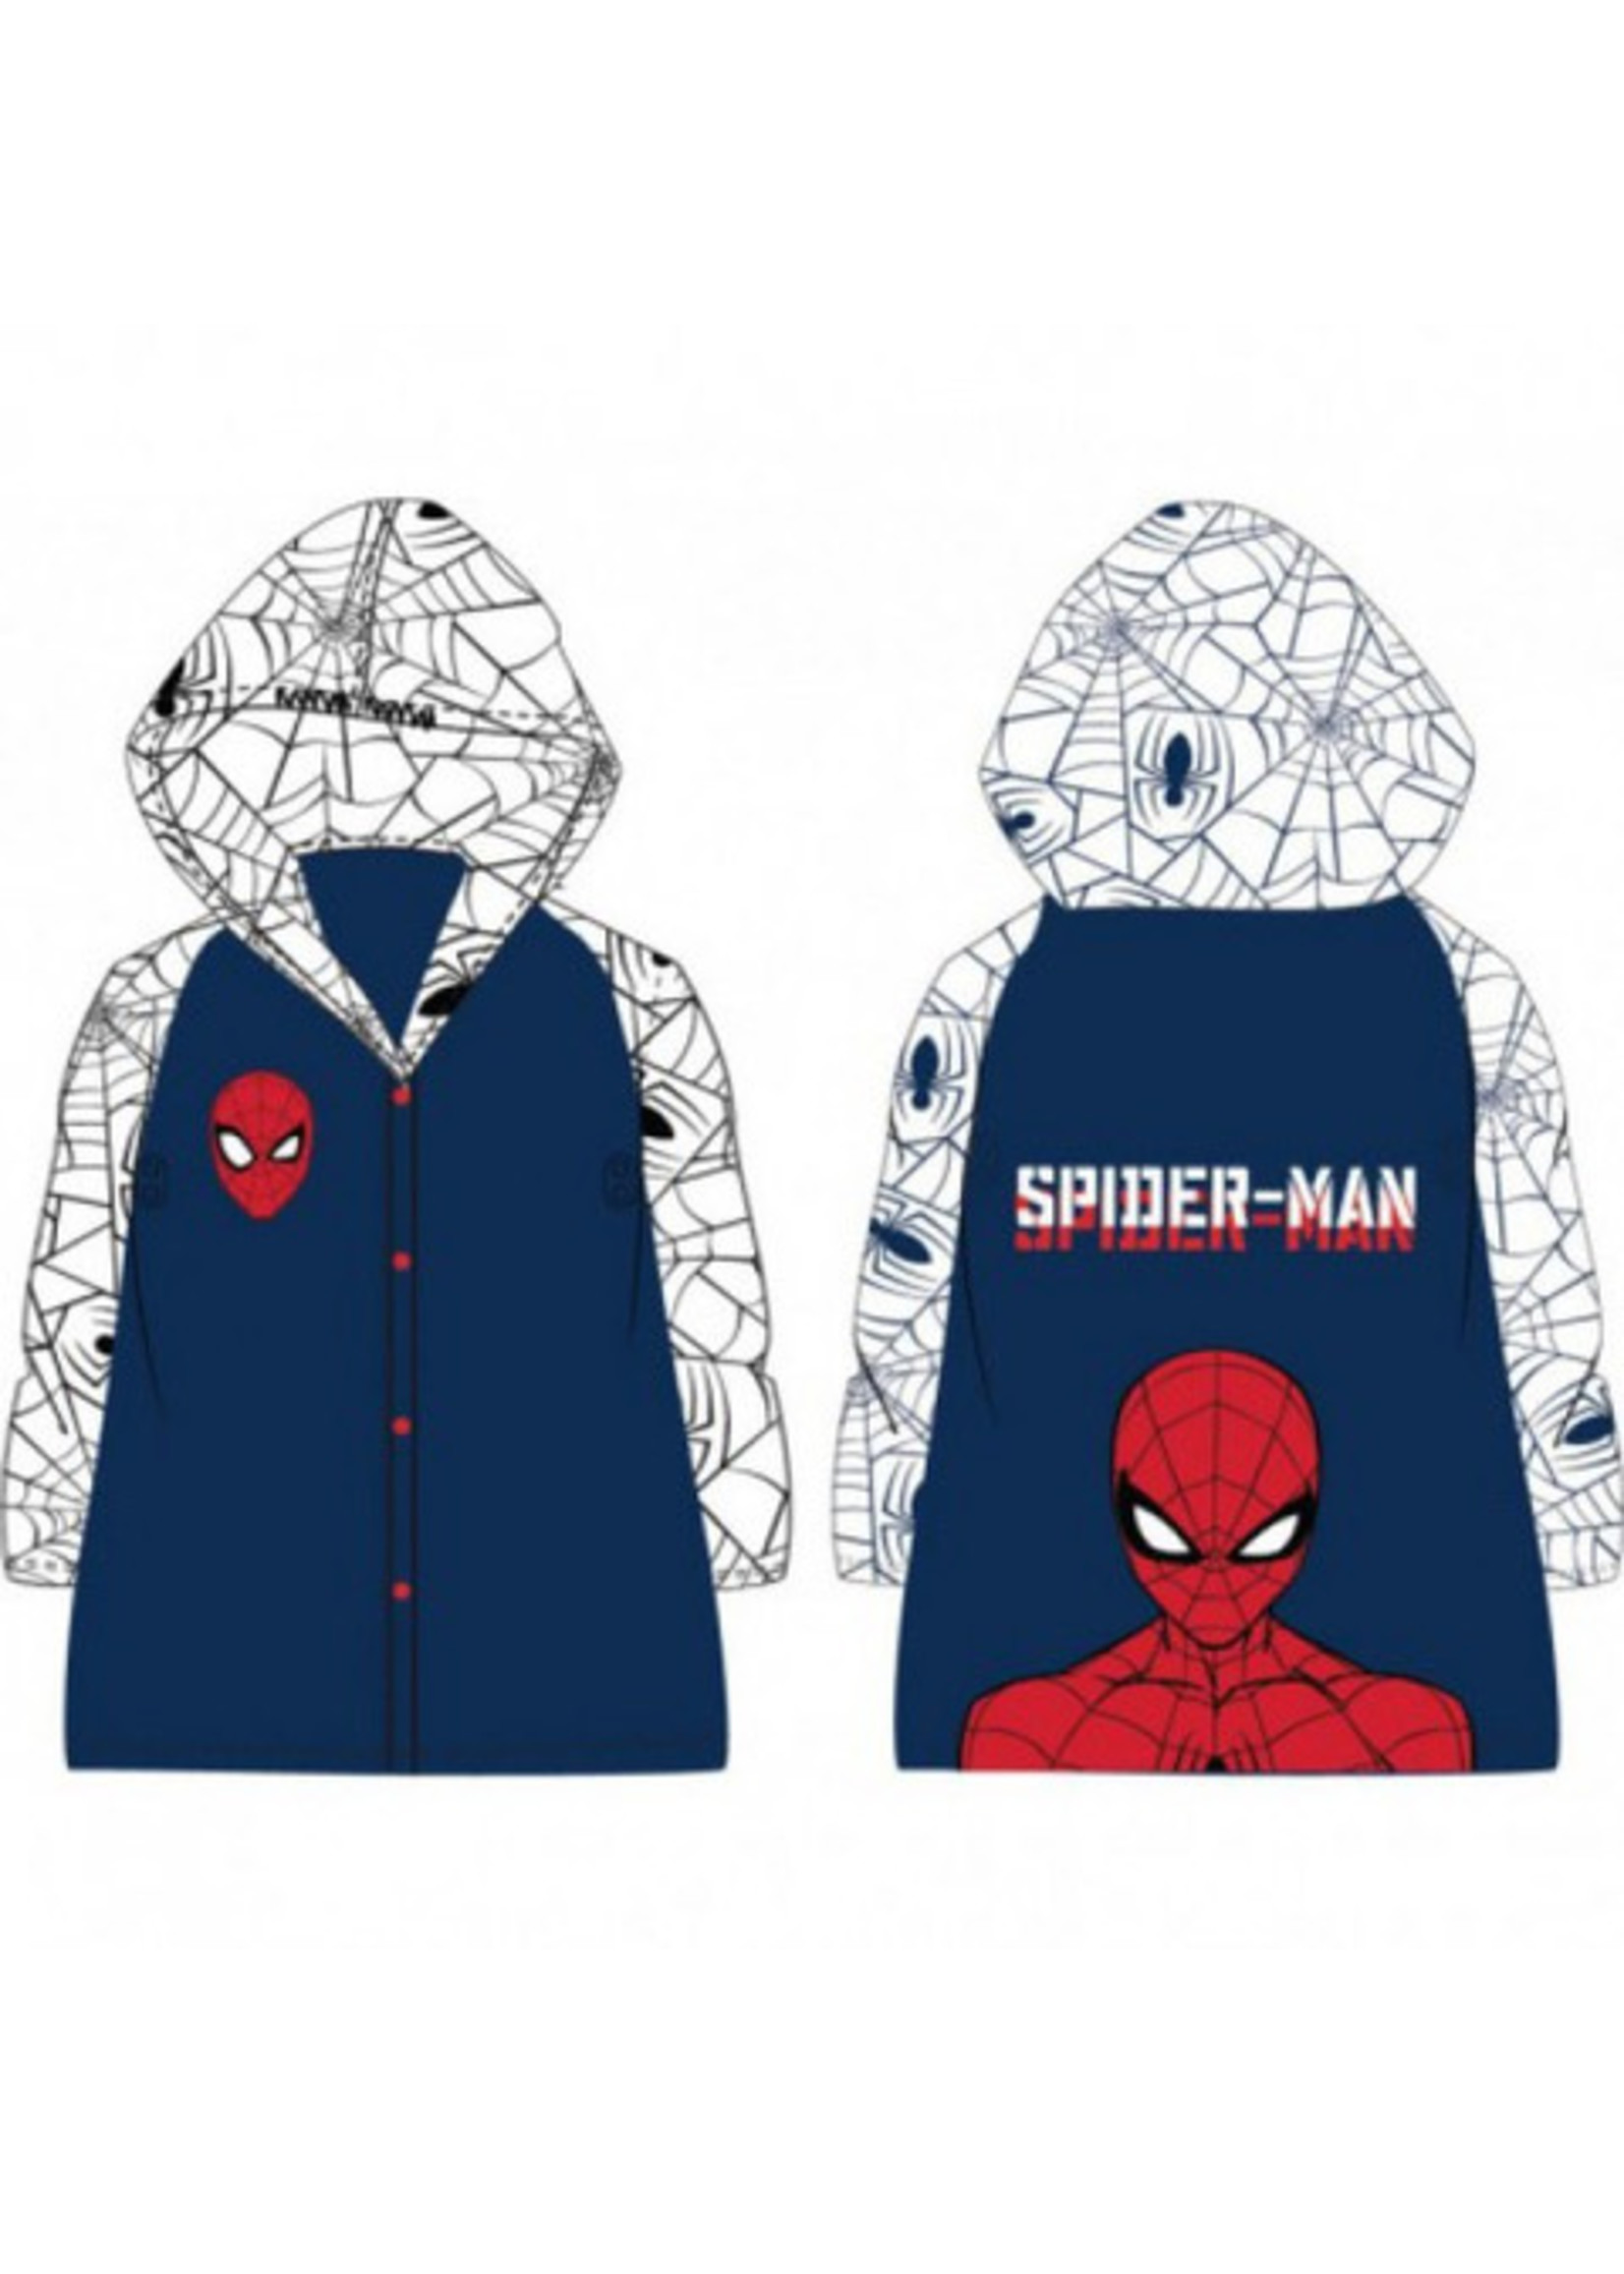 Marvel Spiderman raincoat from Marvel navy blue